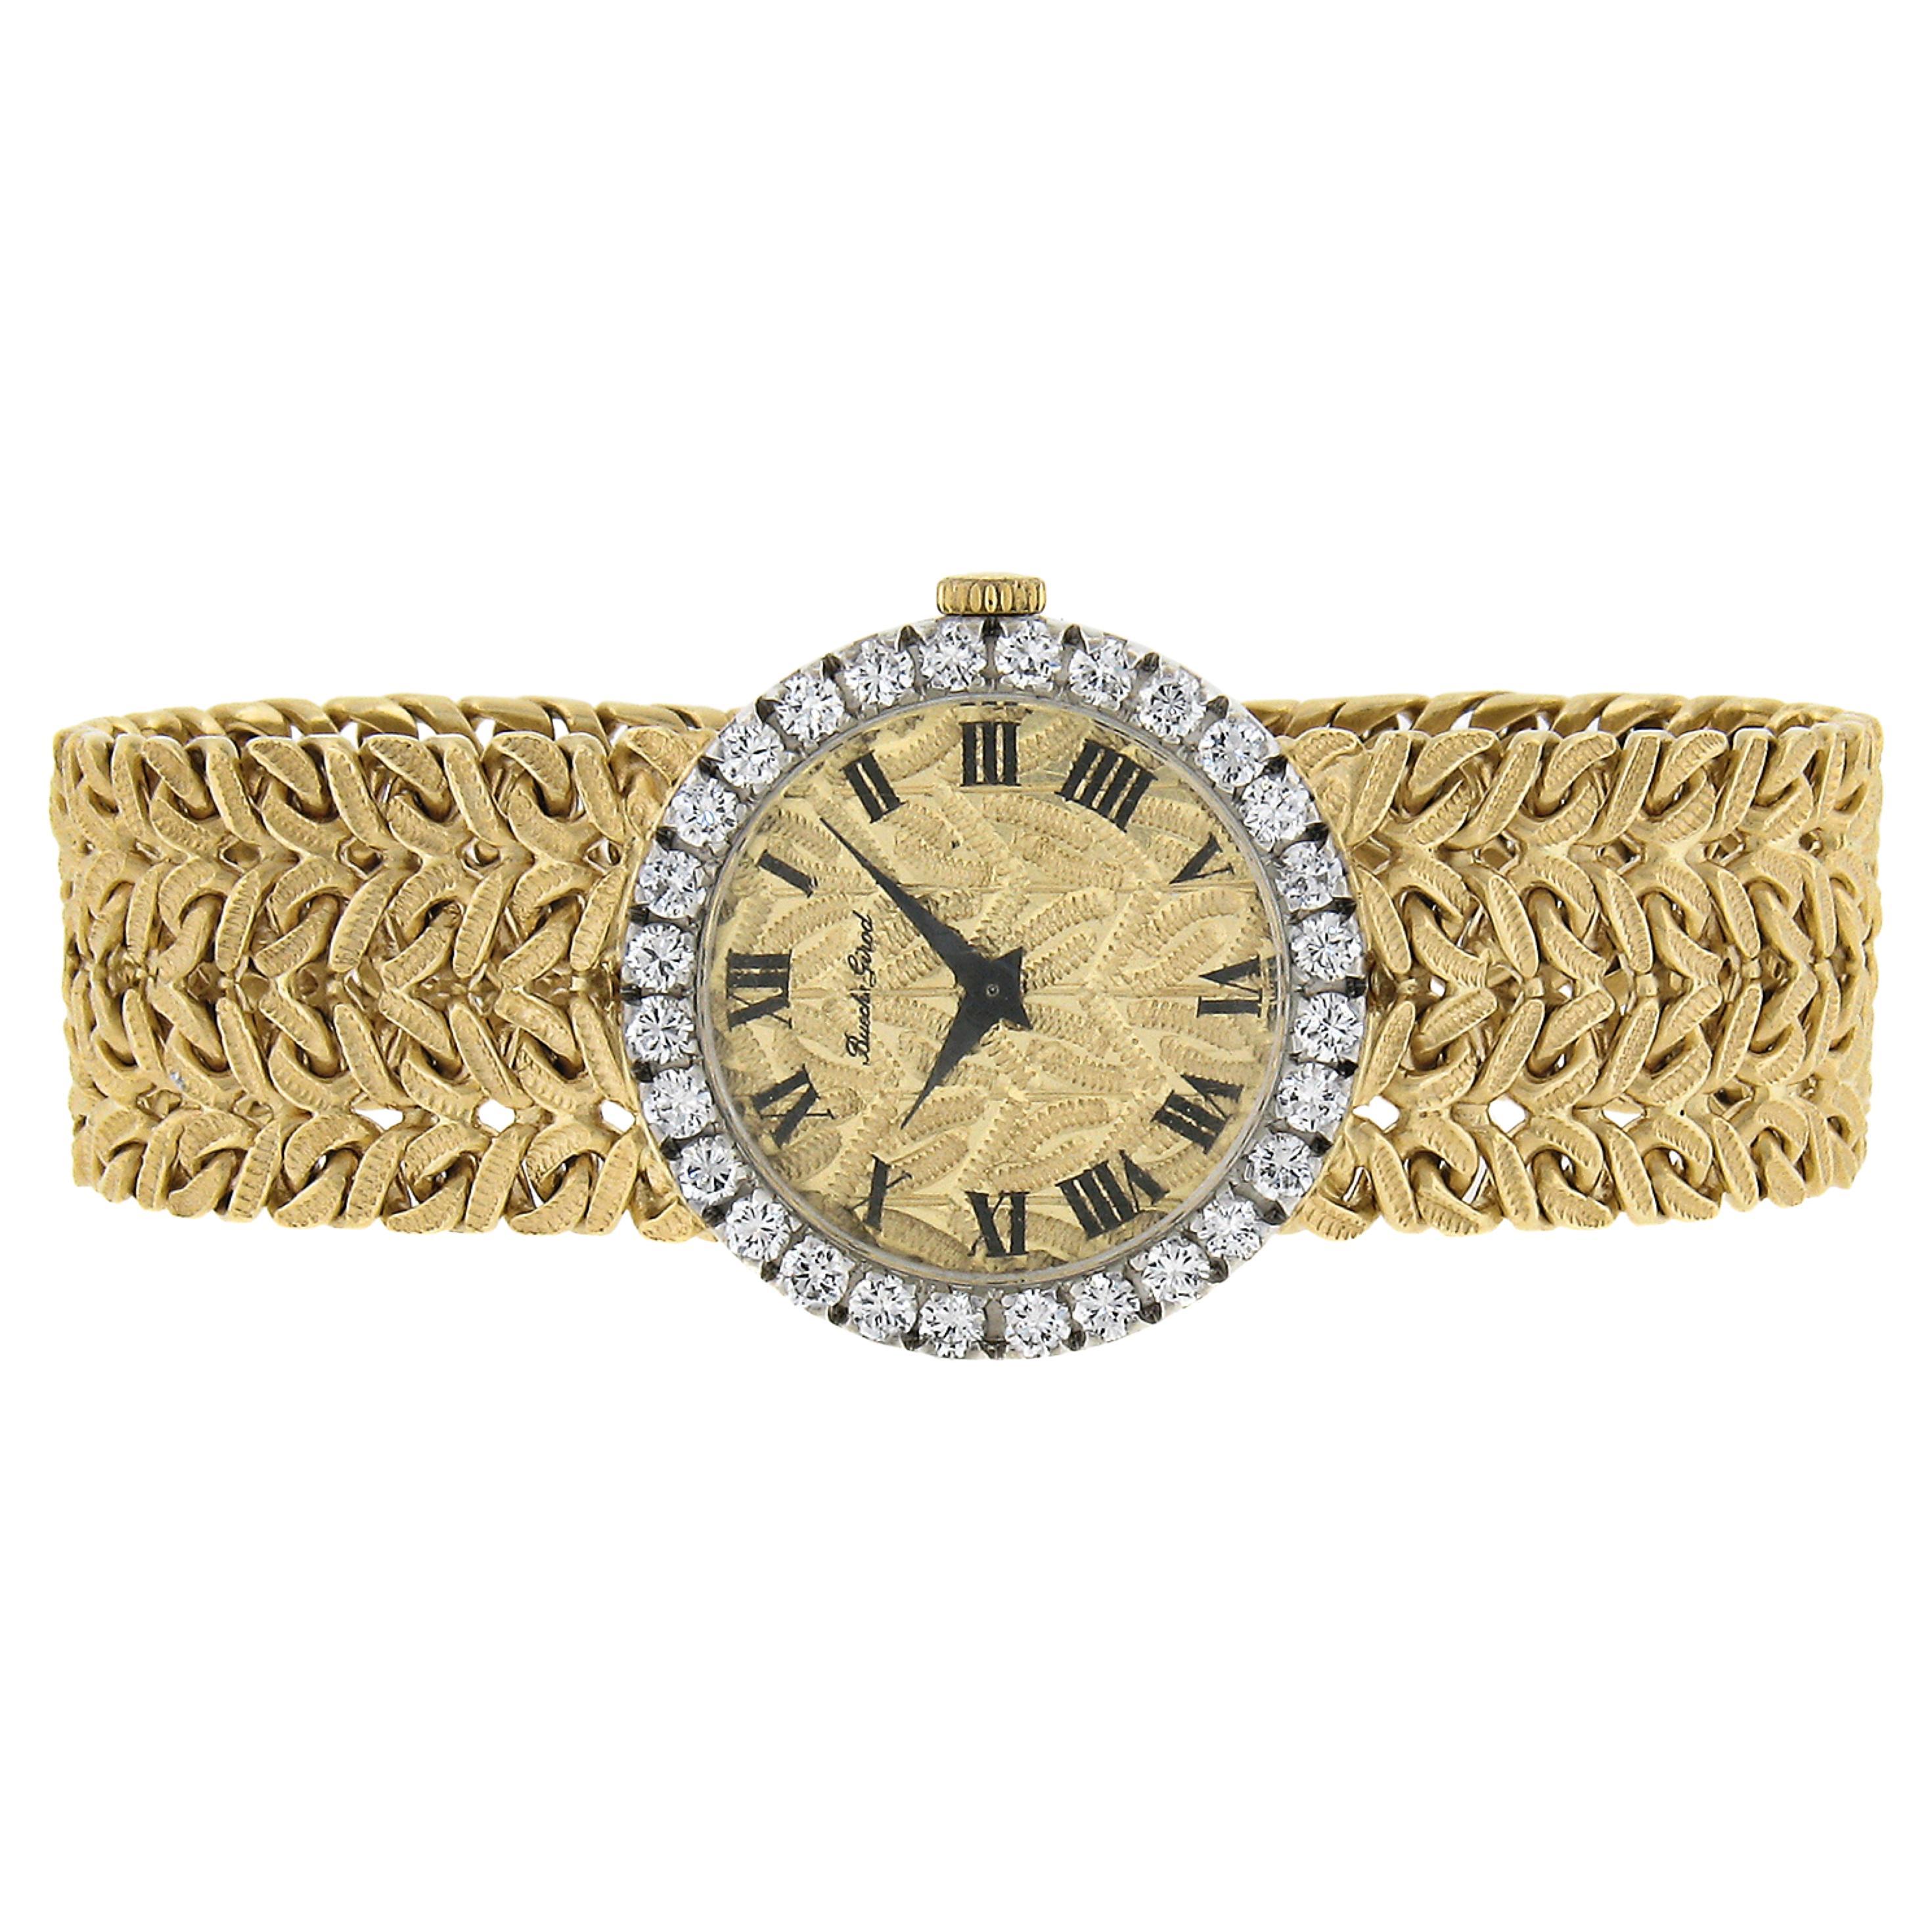 Vintage Bueche Girod 18k Gold 17j Mechanical Round Diamond Wrist Watch Bracelet For Sale